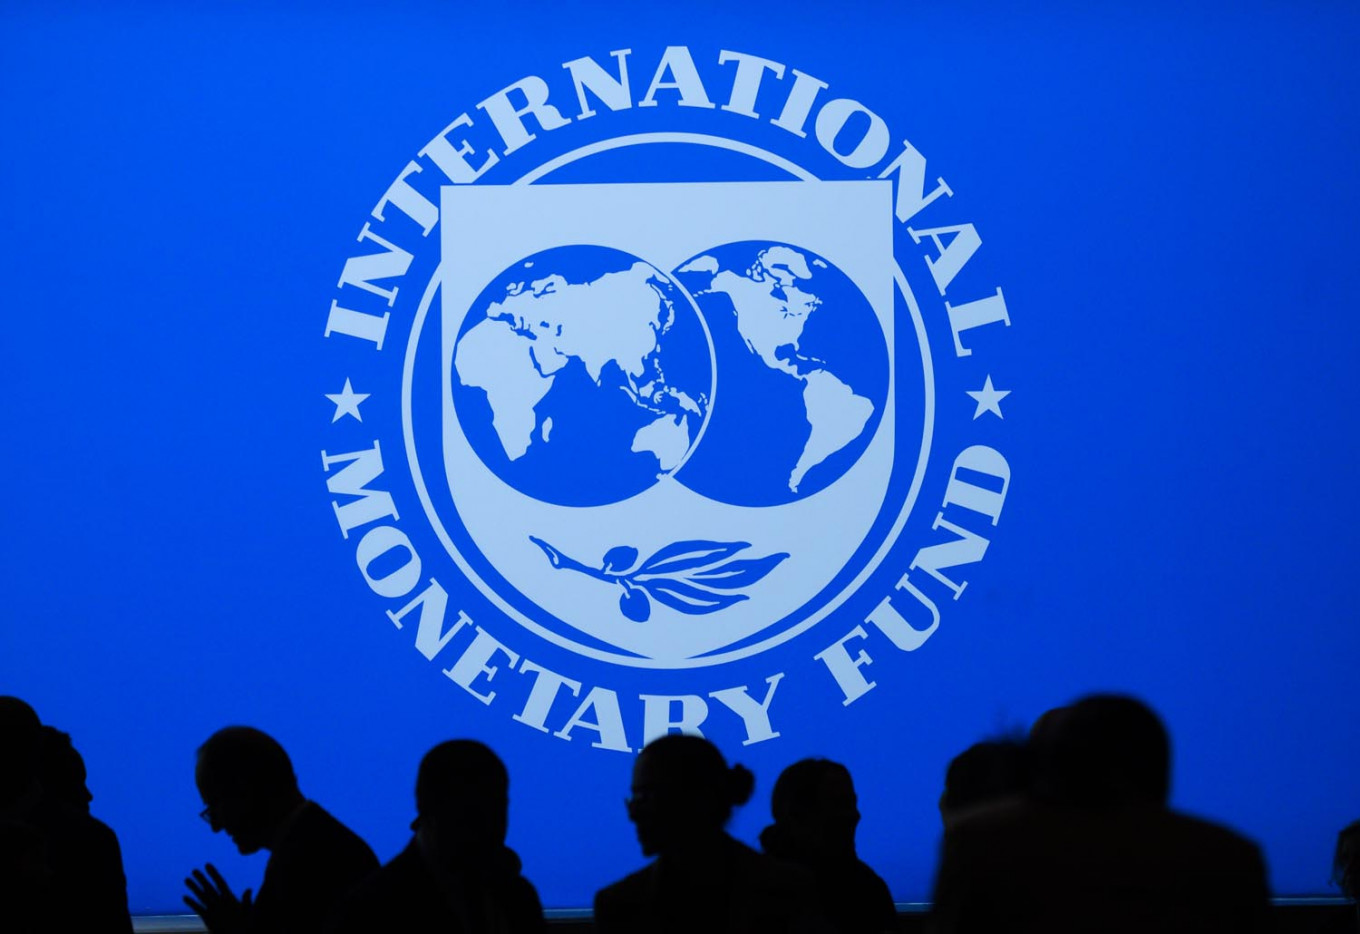 IMF Team Statement on Sri Lanka -IMF will support Sri Lanka’s efforts to overcome the current economic crisis